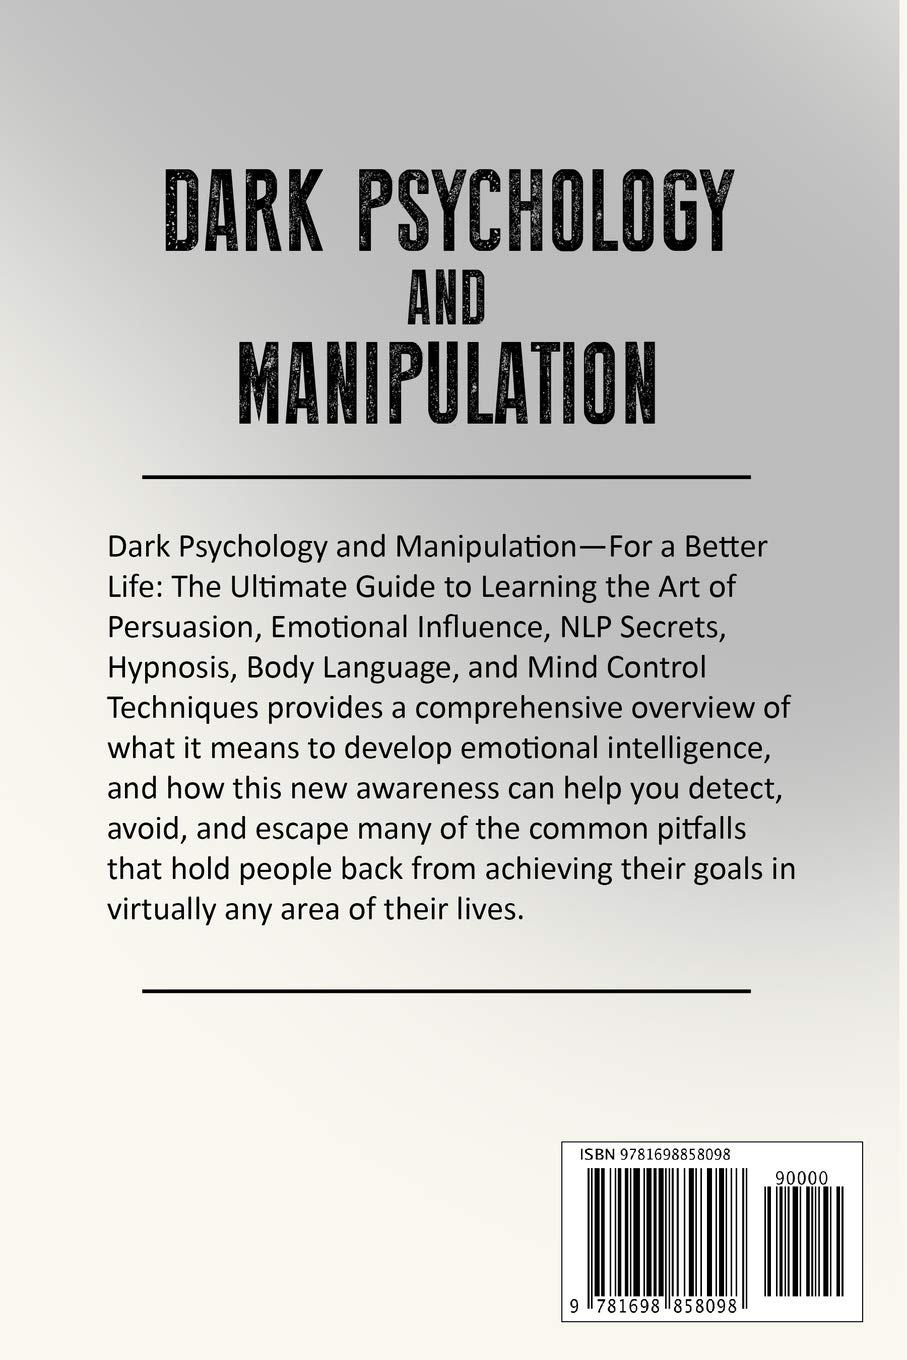 DARK PSYCHOLOGY & MANIPULATION